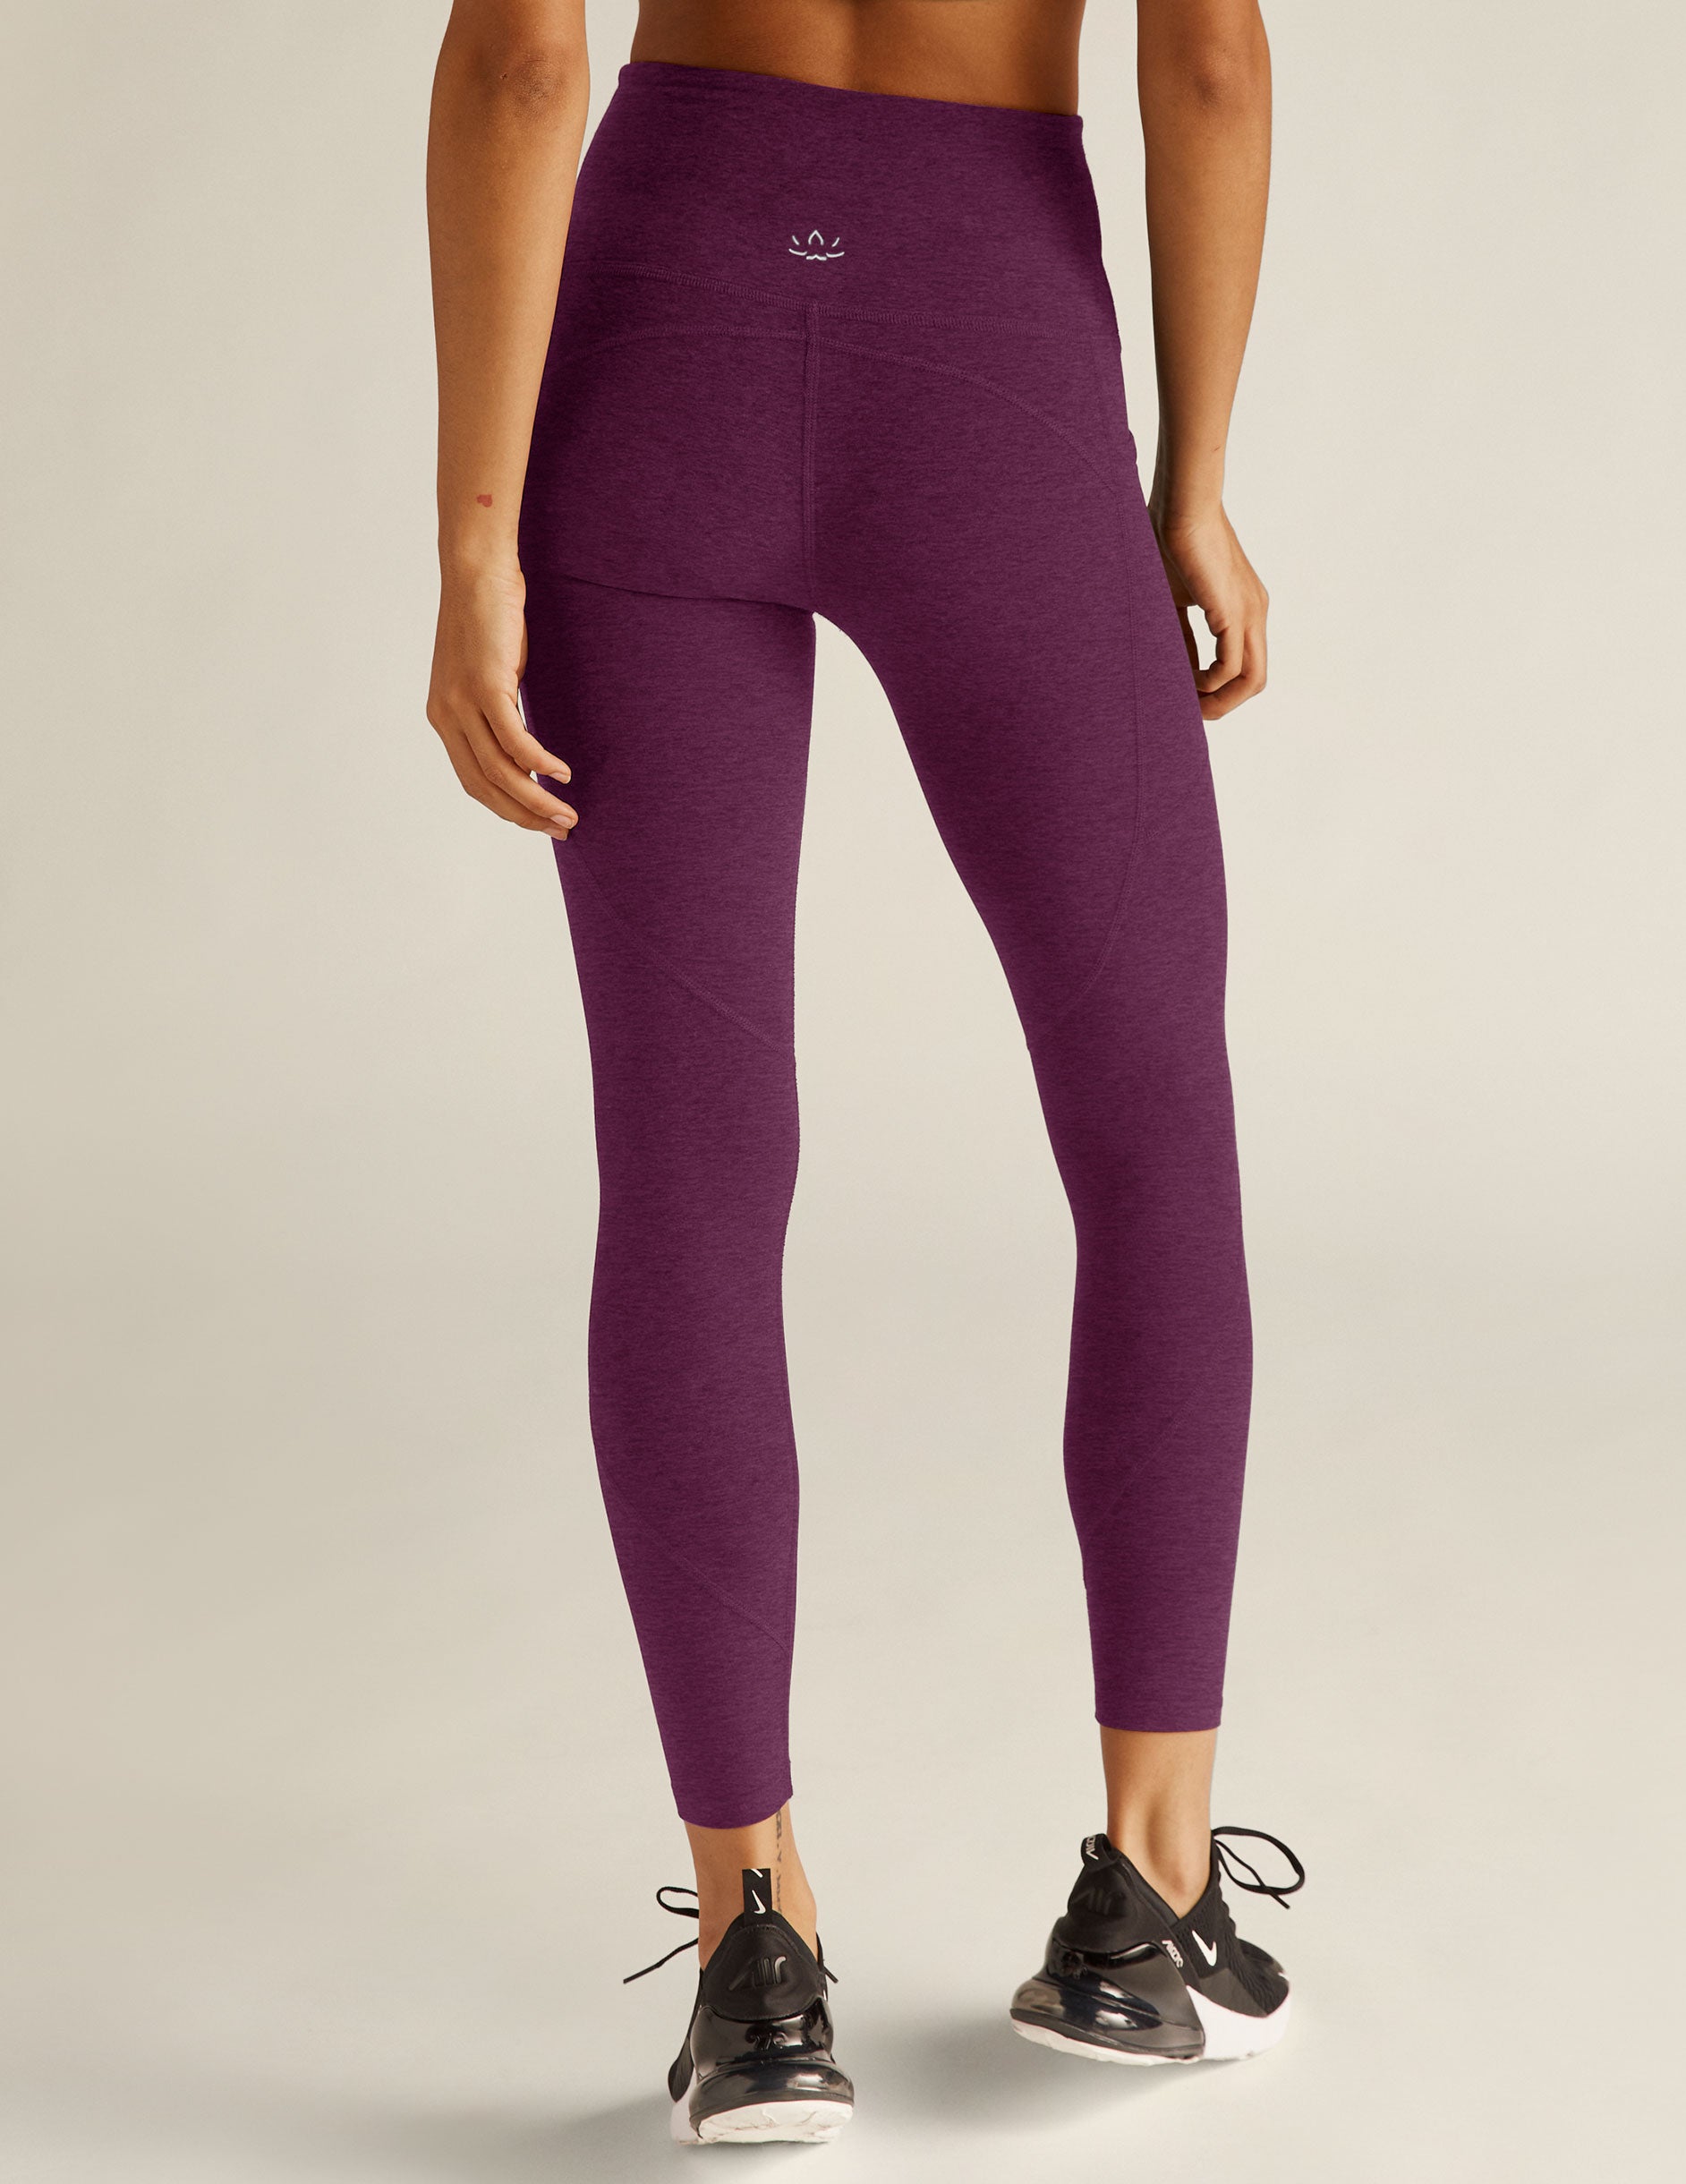 purple high-waisted midi leggings with side pockets. 